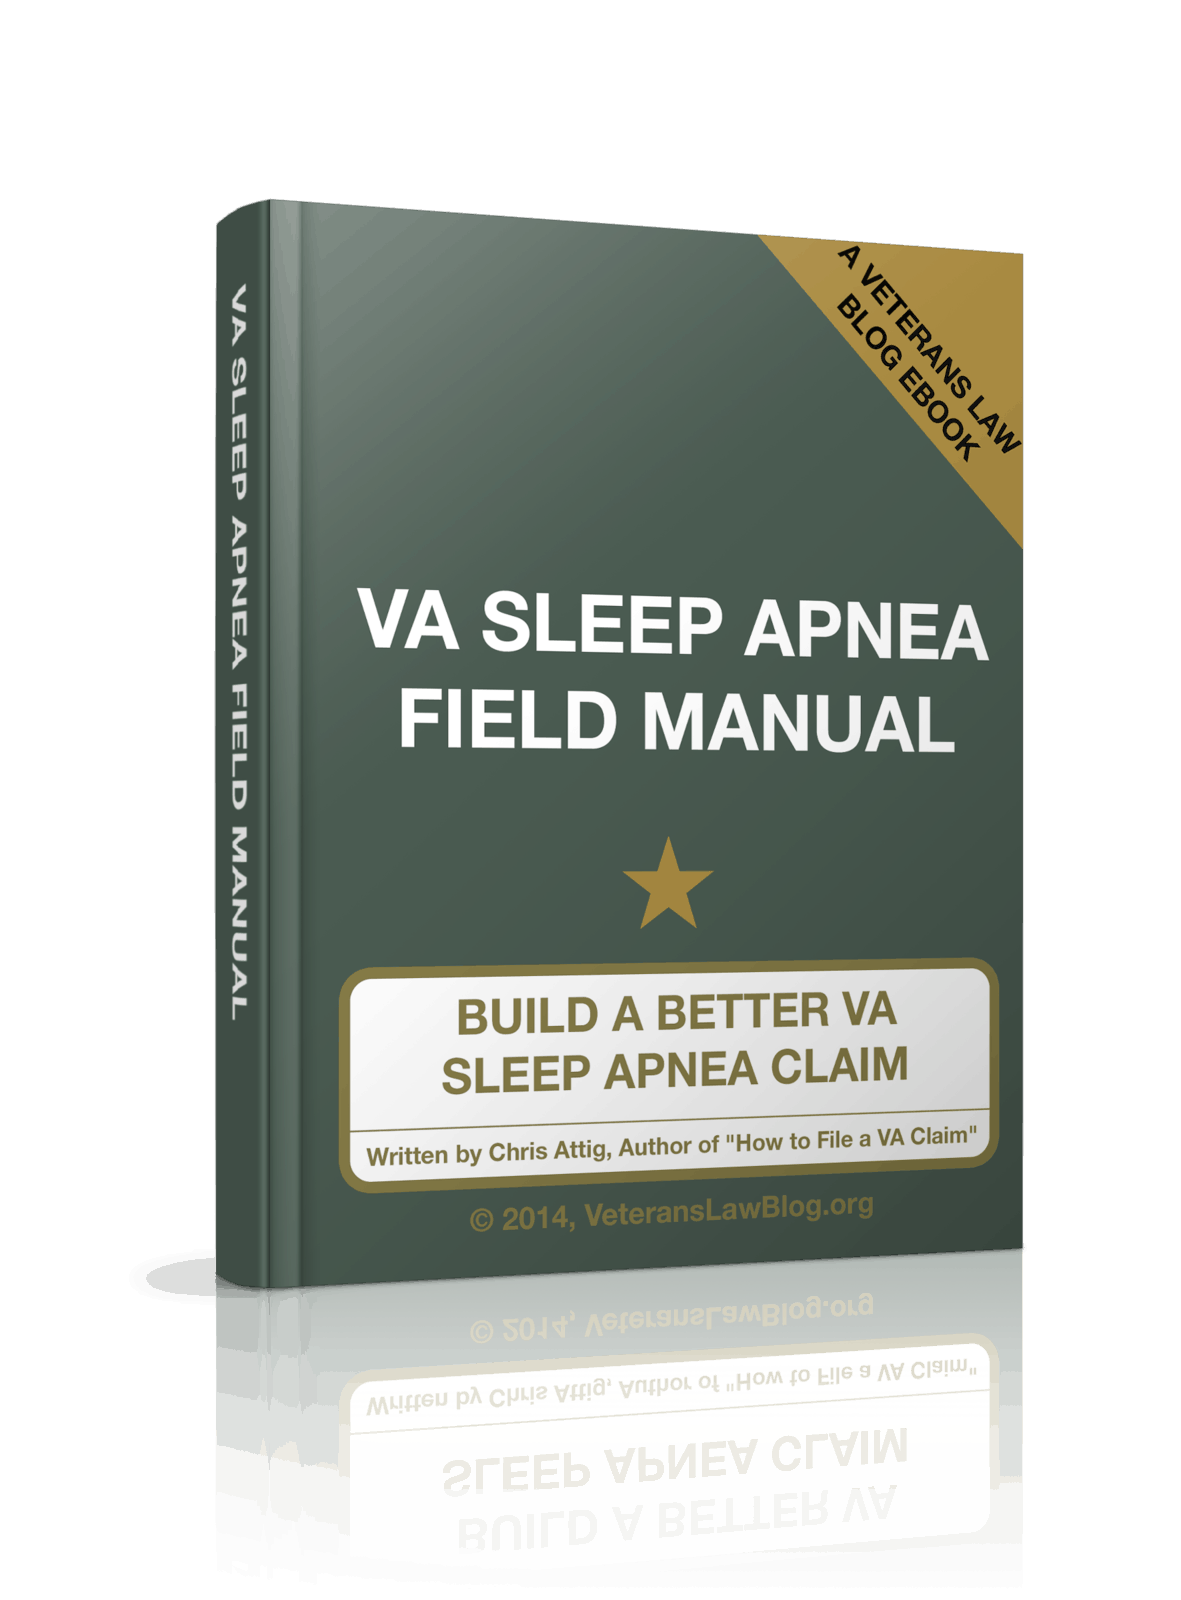 Our VA Sleep Apnea Field Manual Is Published!!